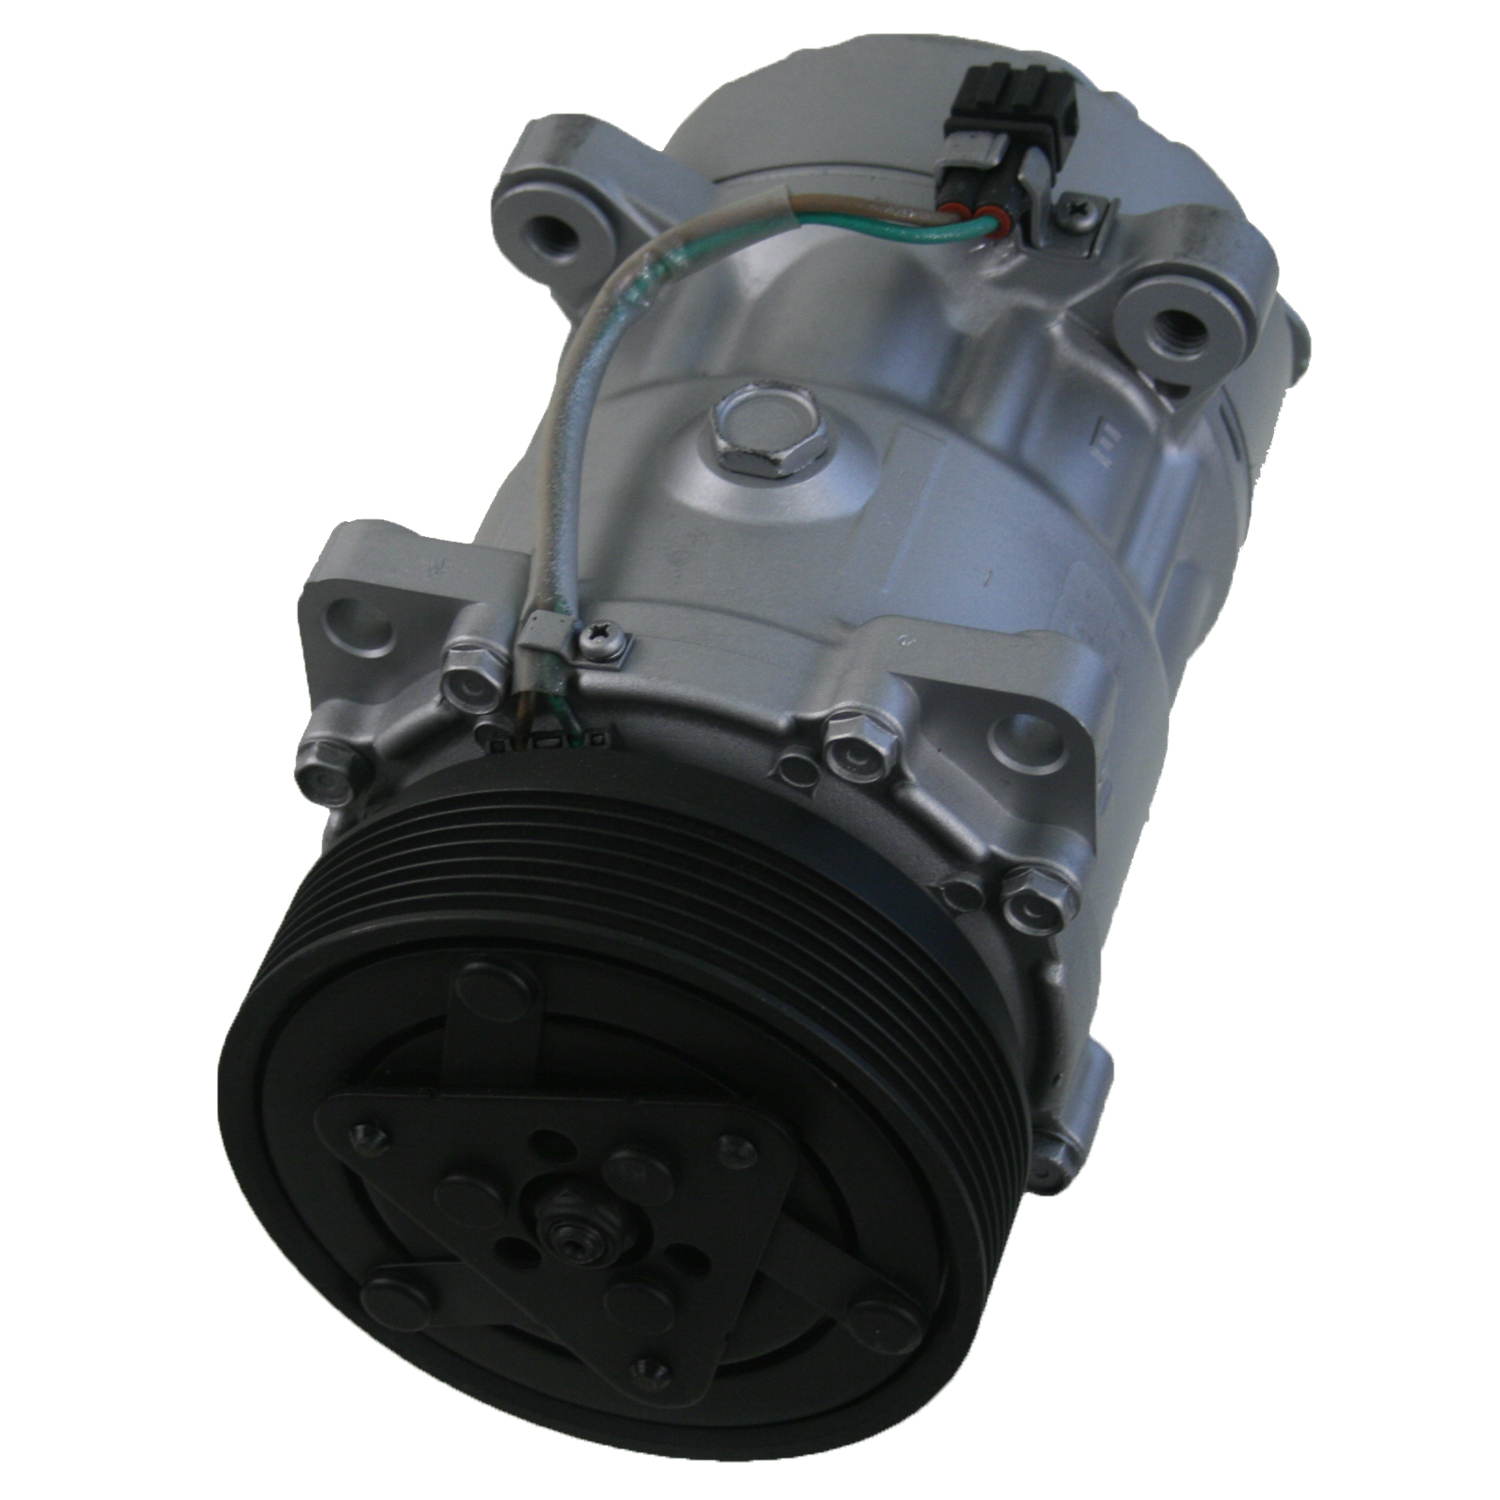 TCW Compressor 40759.701 Remanufactured Product Image field_60b6a13a6e67c